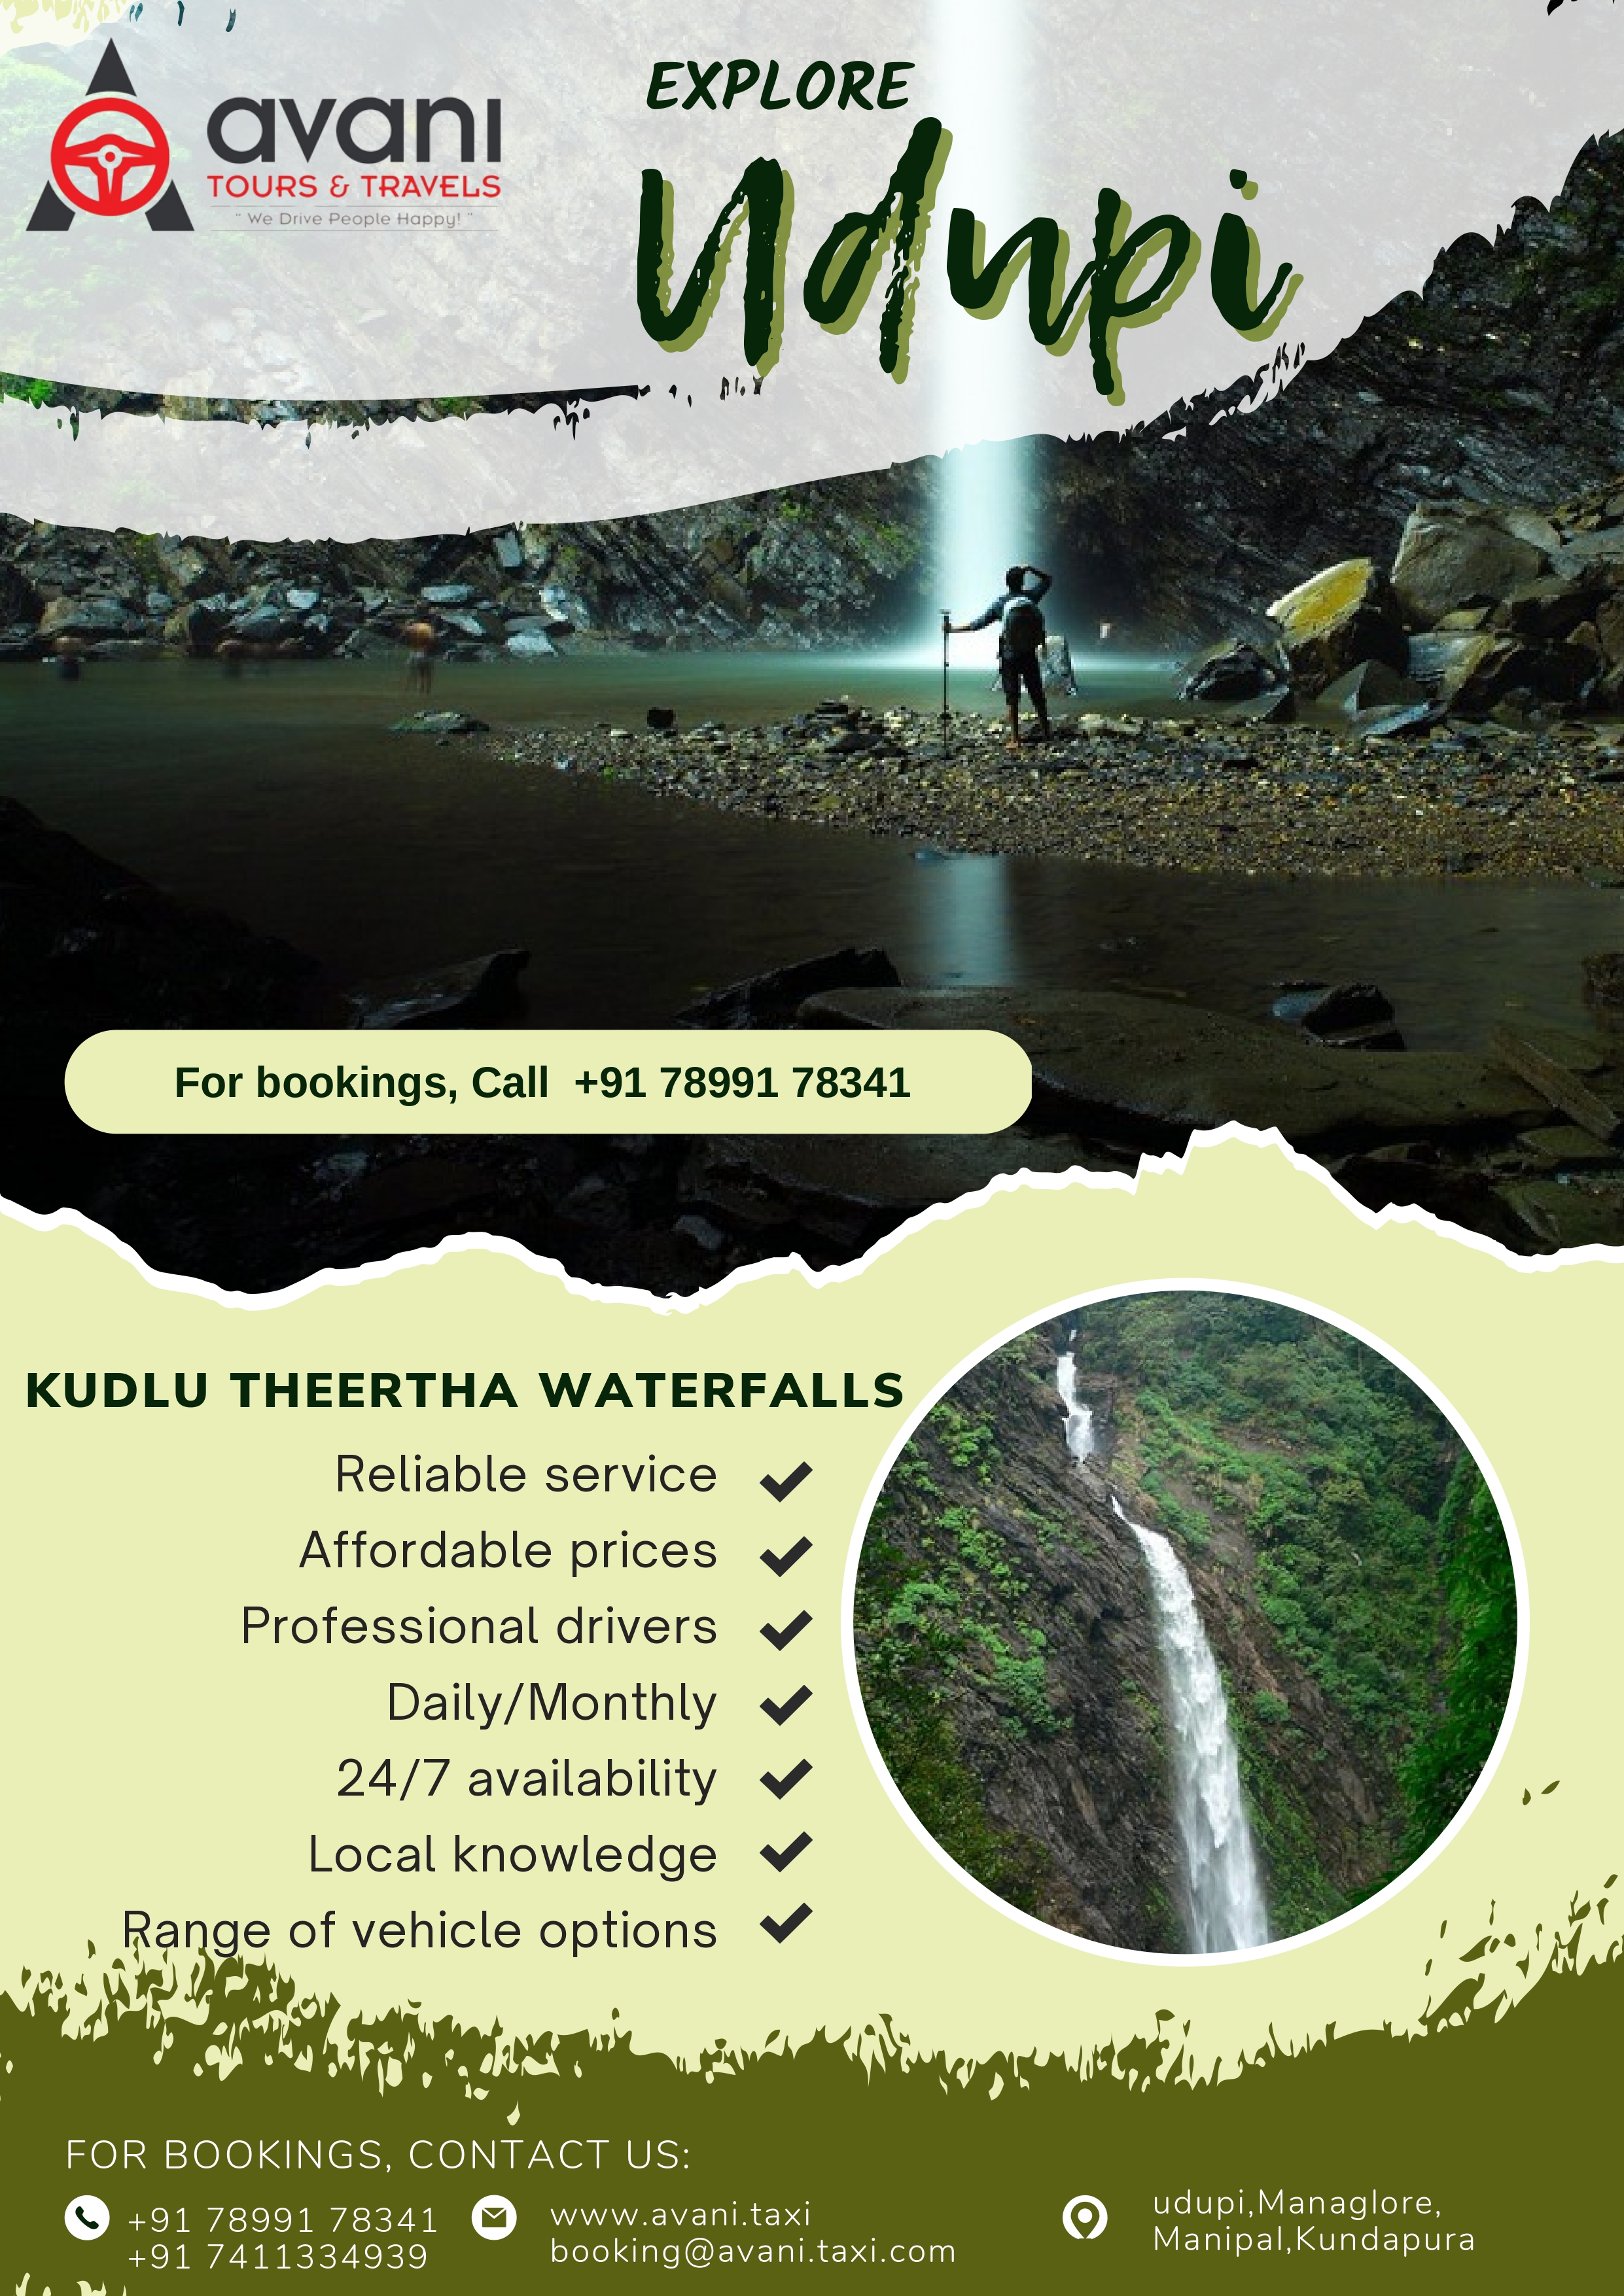 Kudlu Teertha Falls in Hebri: A Natural Beauty to Behold